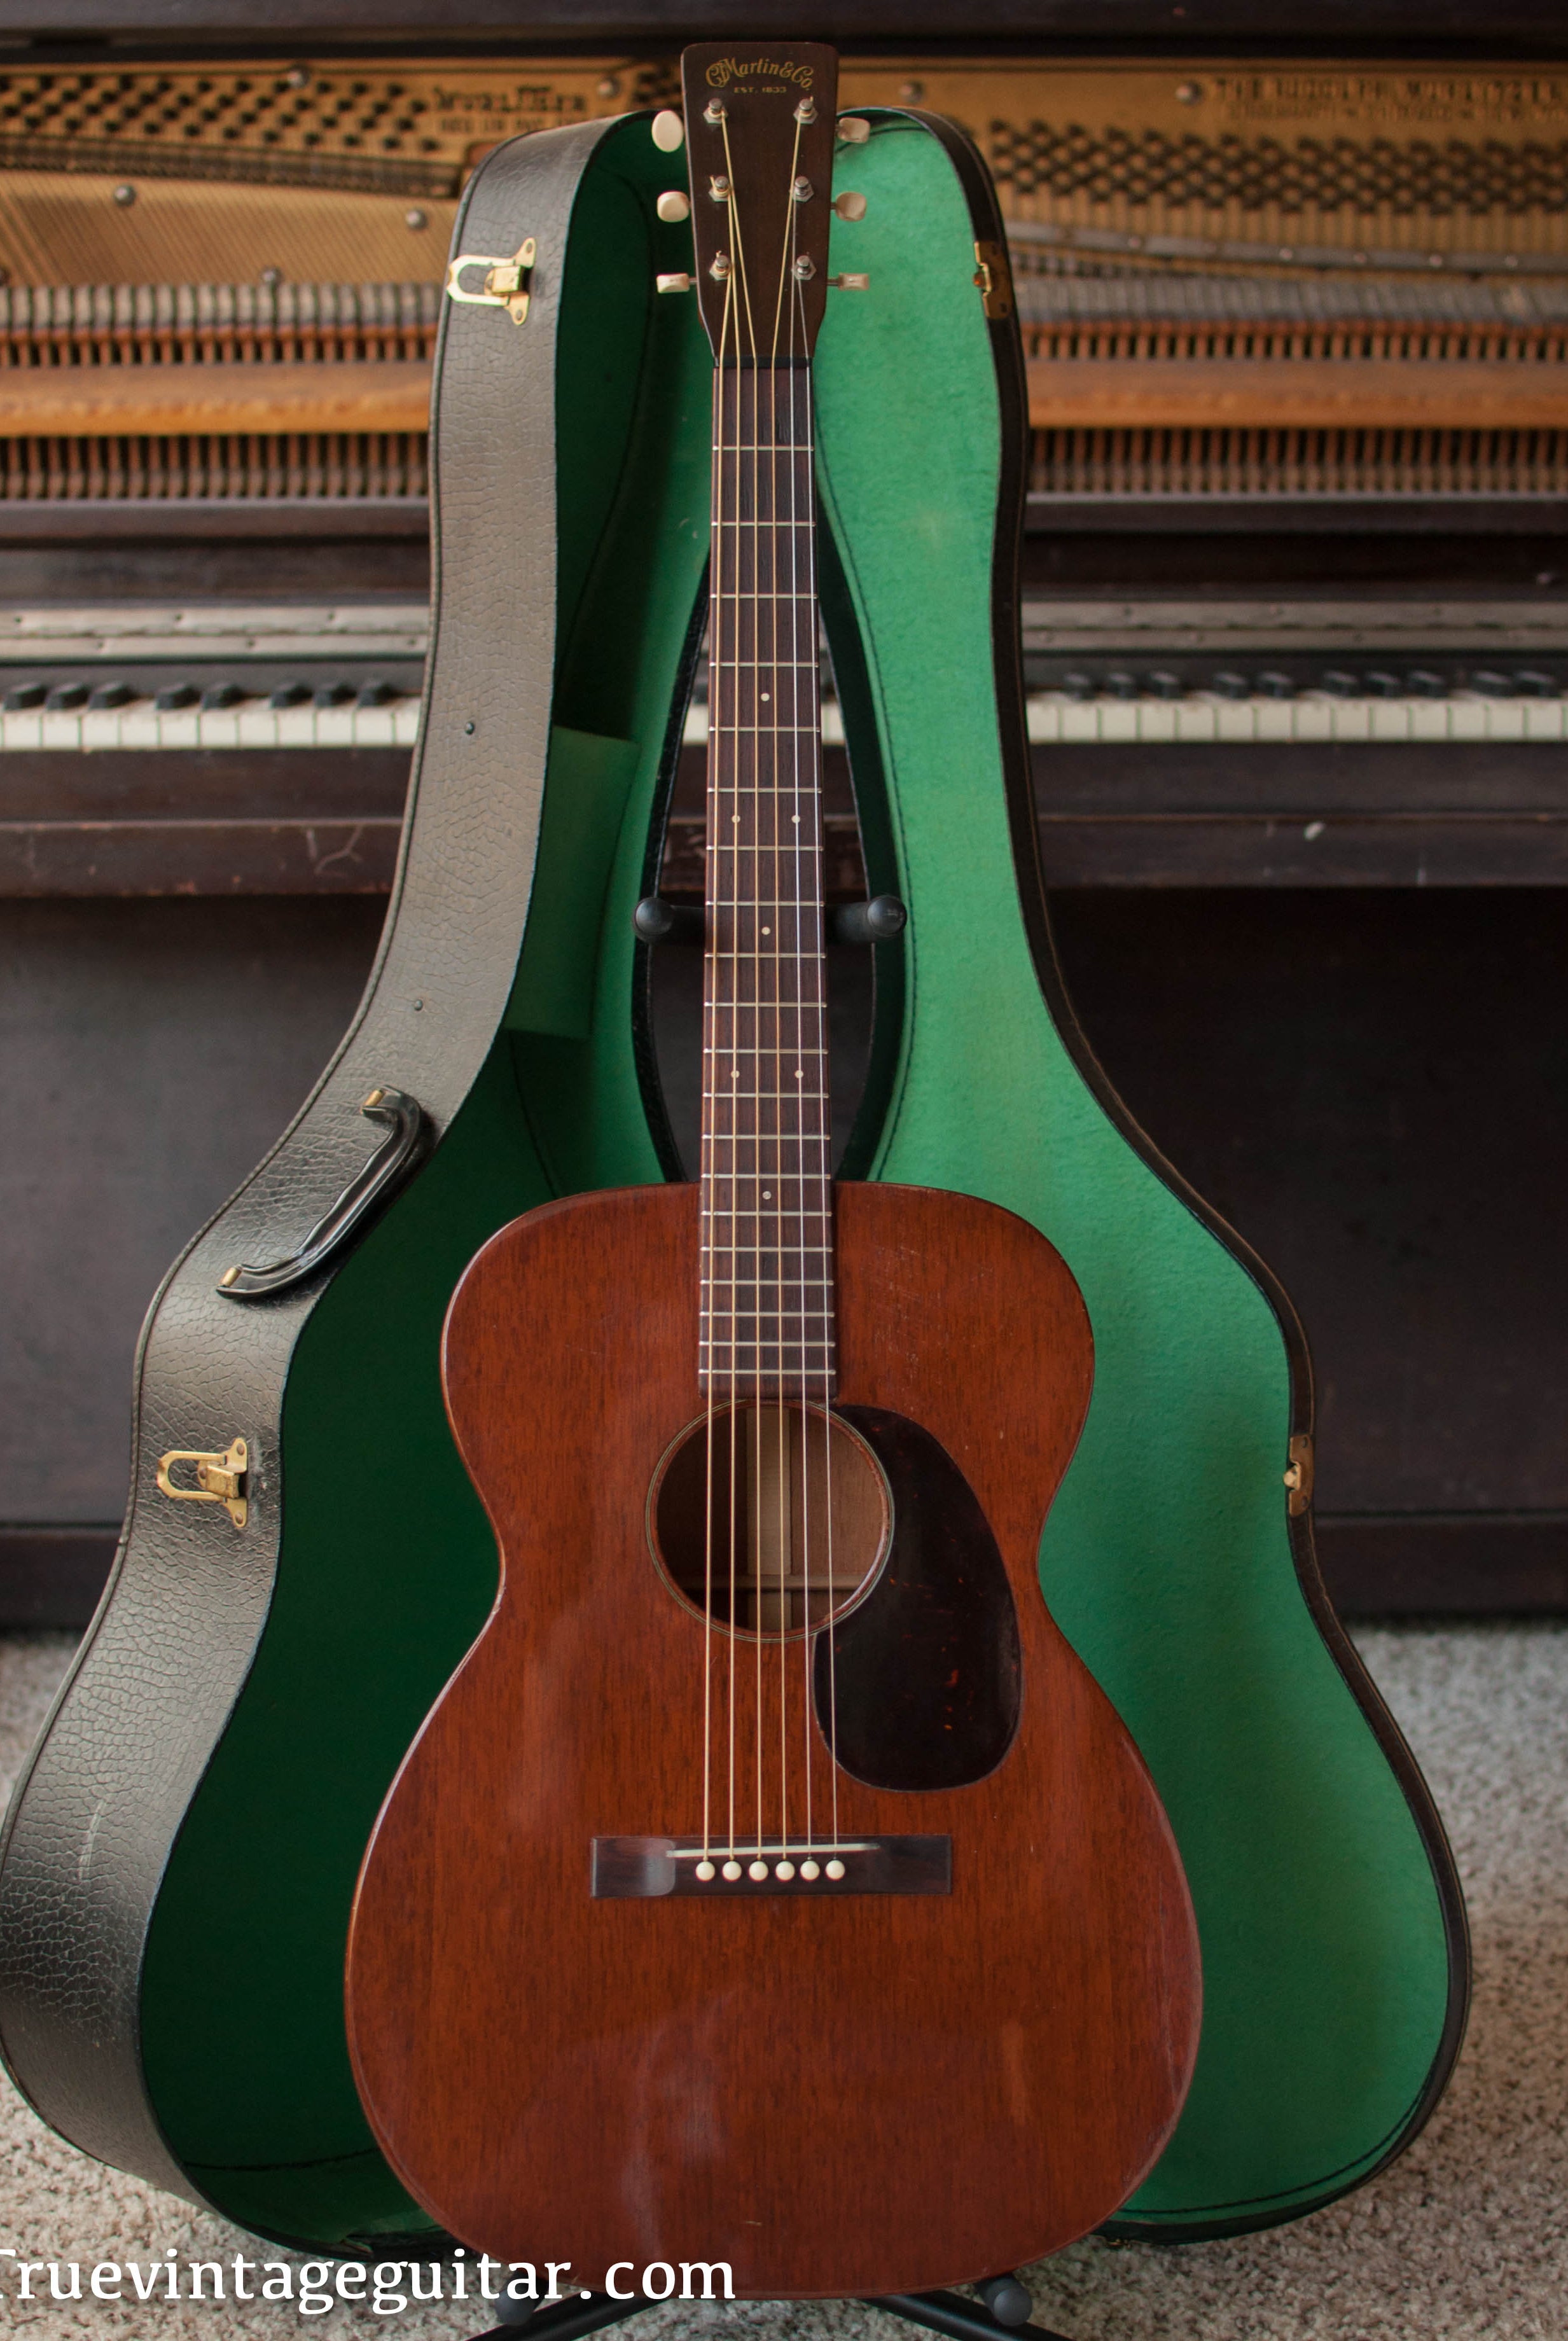 Vintage Martin acoustic guitar 00-17 1954